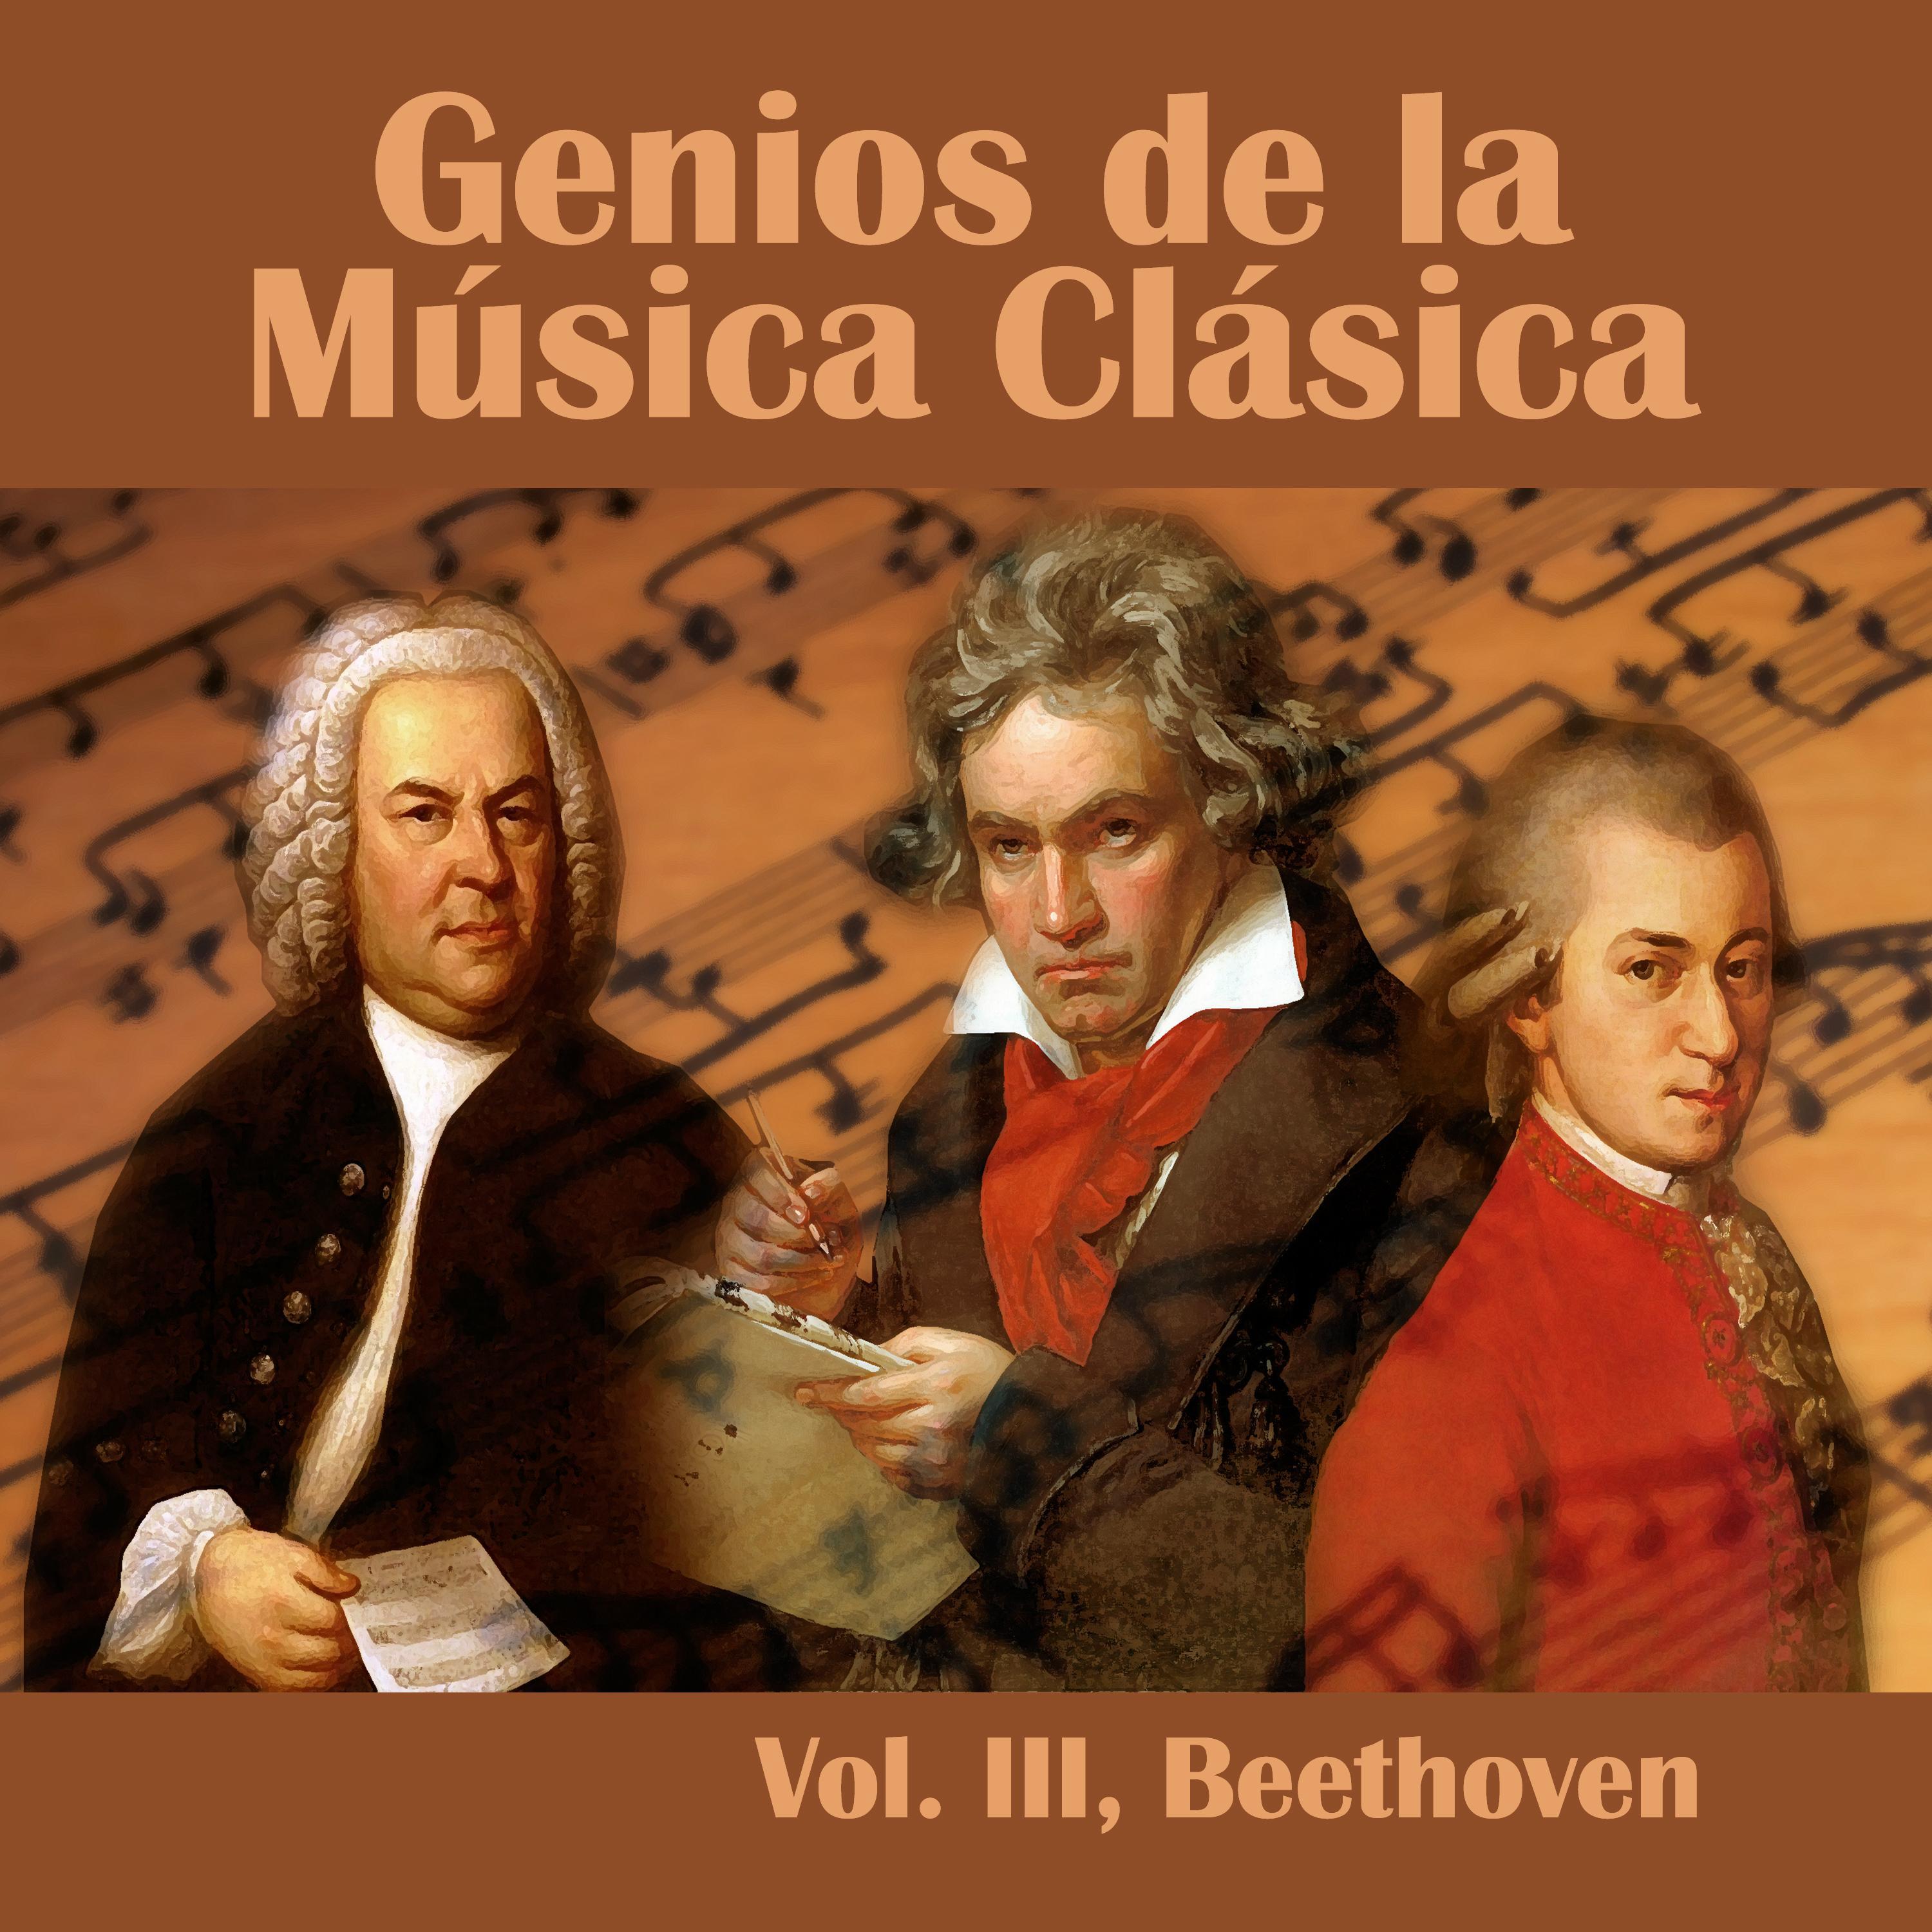 Genios de la Mu sica Cla sica Vol. III, Beethoven